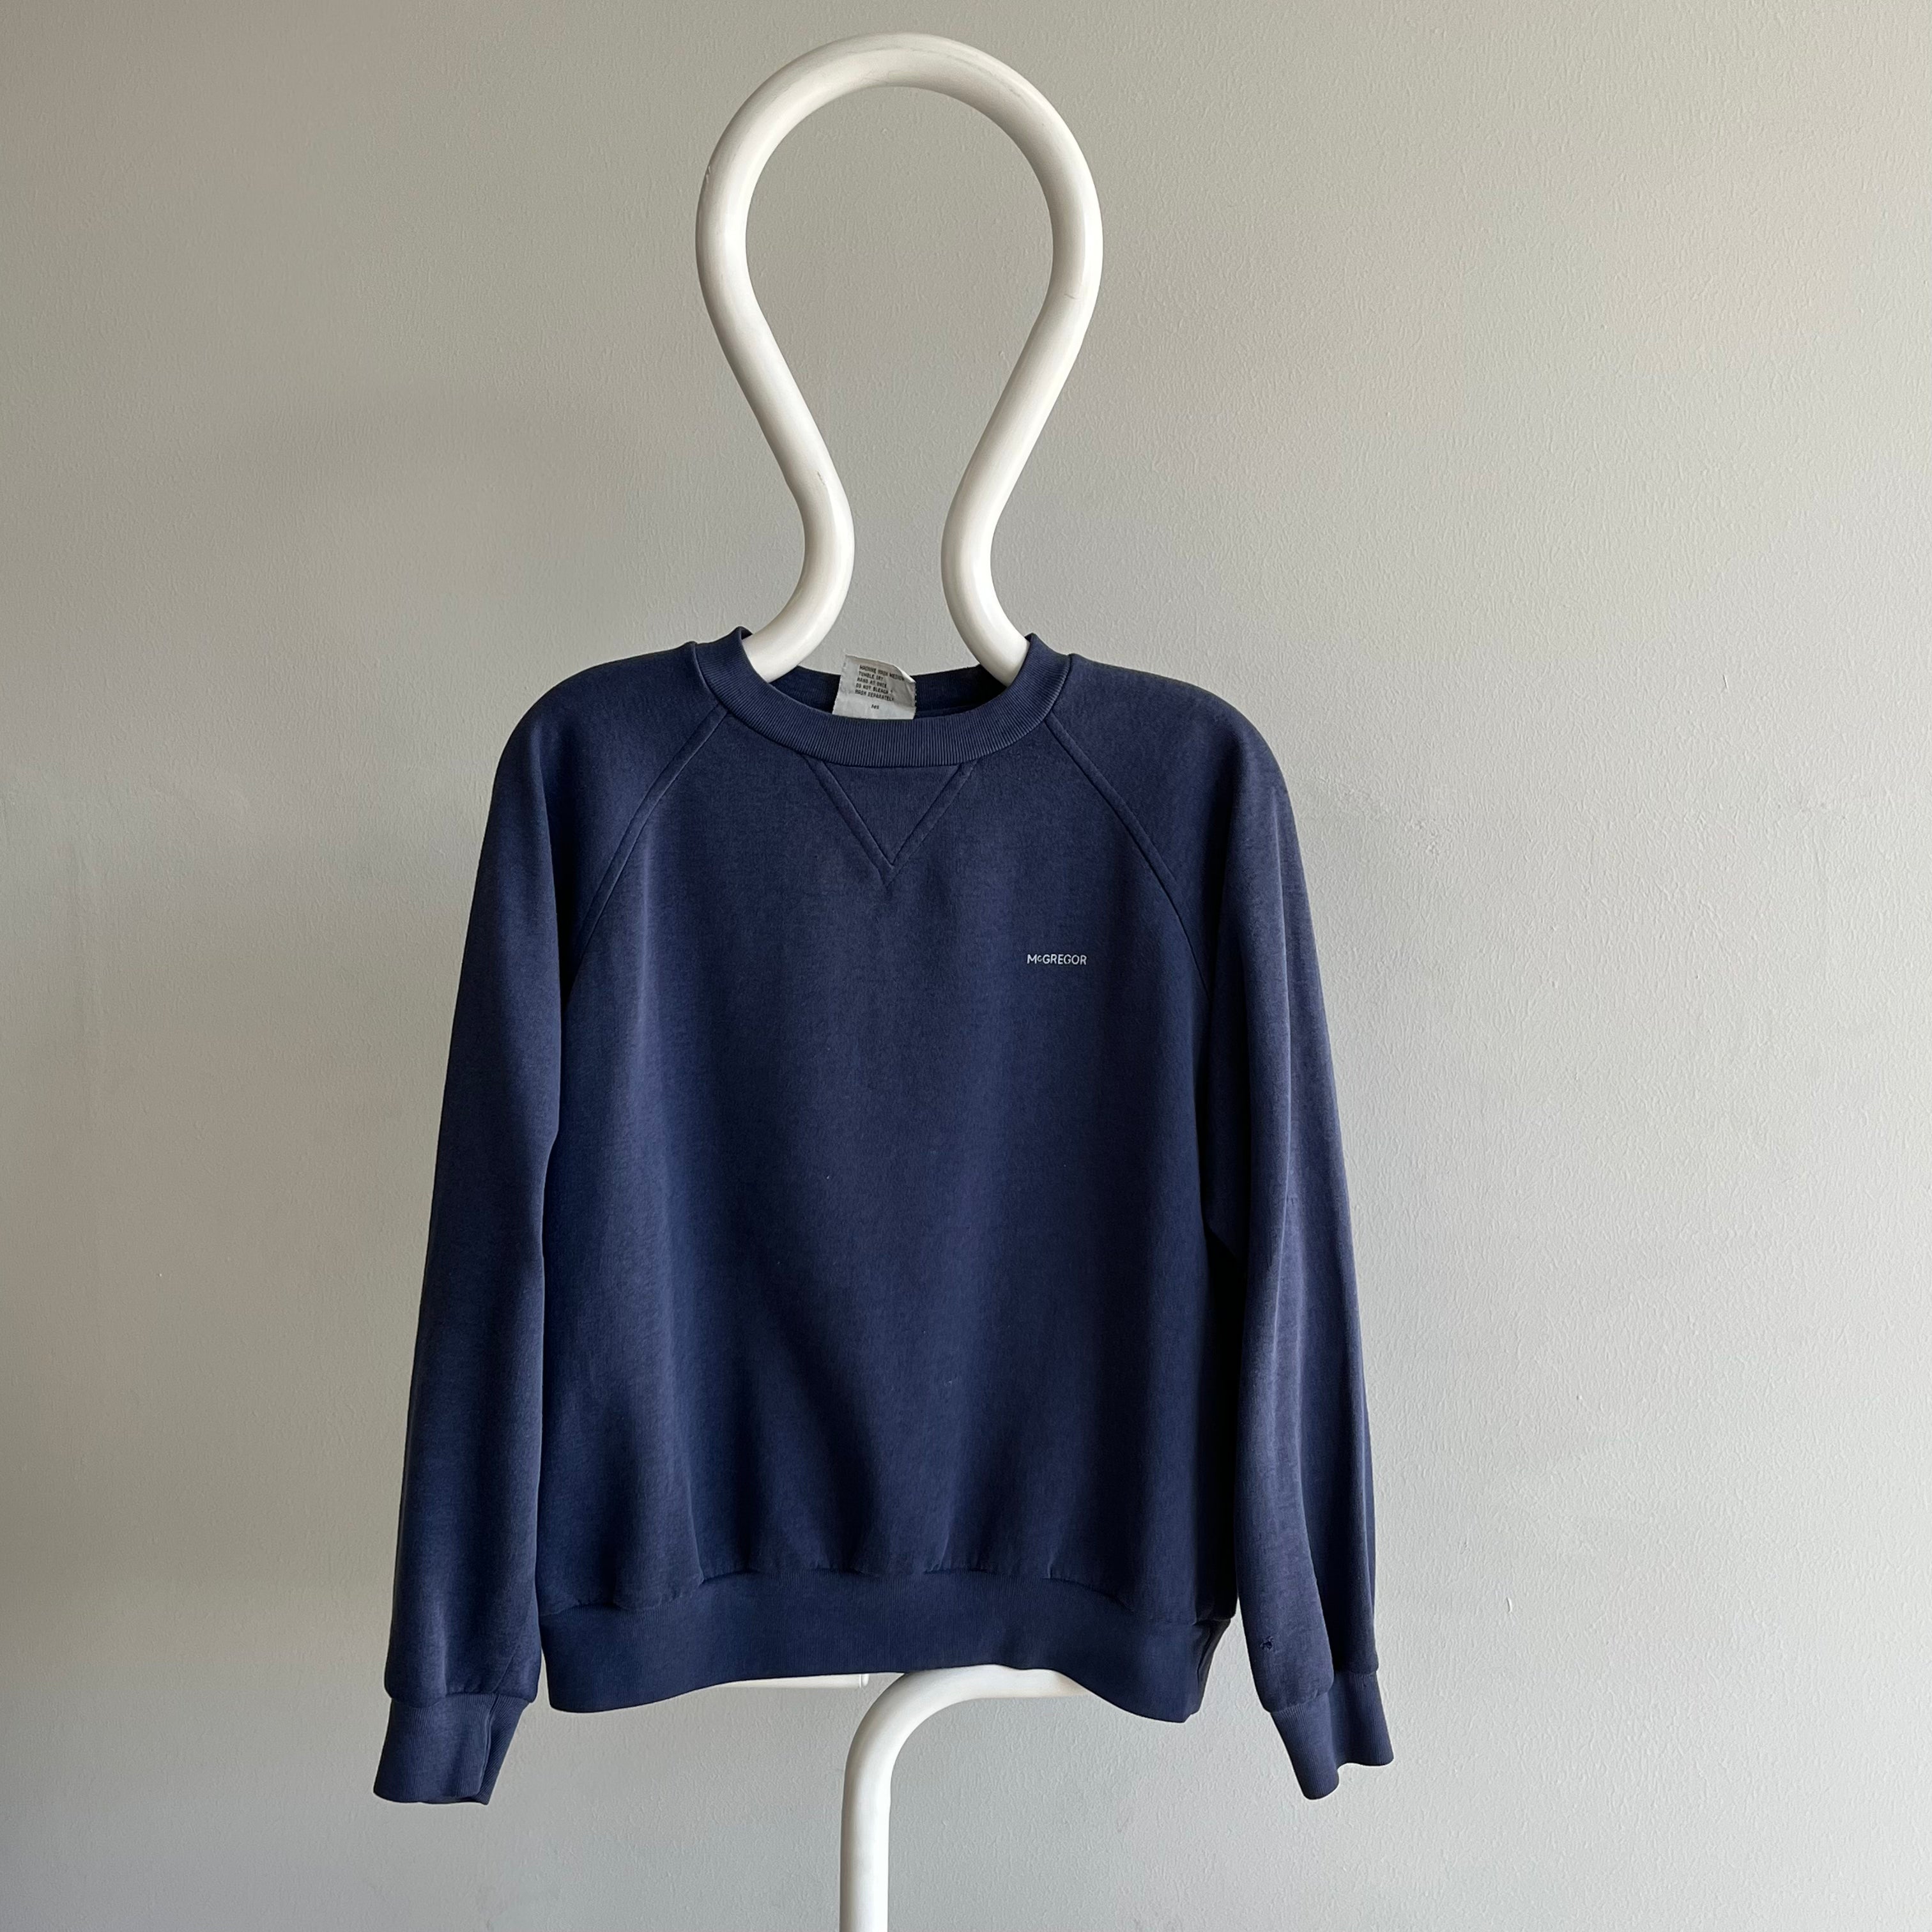 1980s McGregor Thin and Faded Navy Sweatshirt